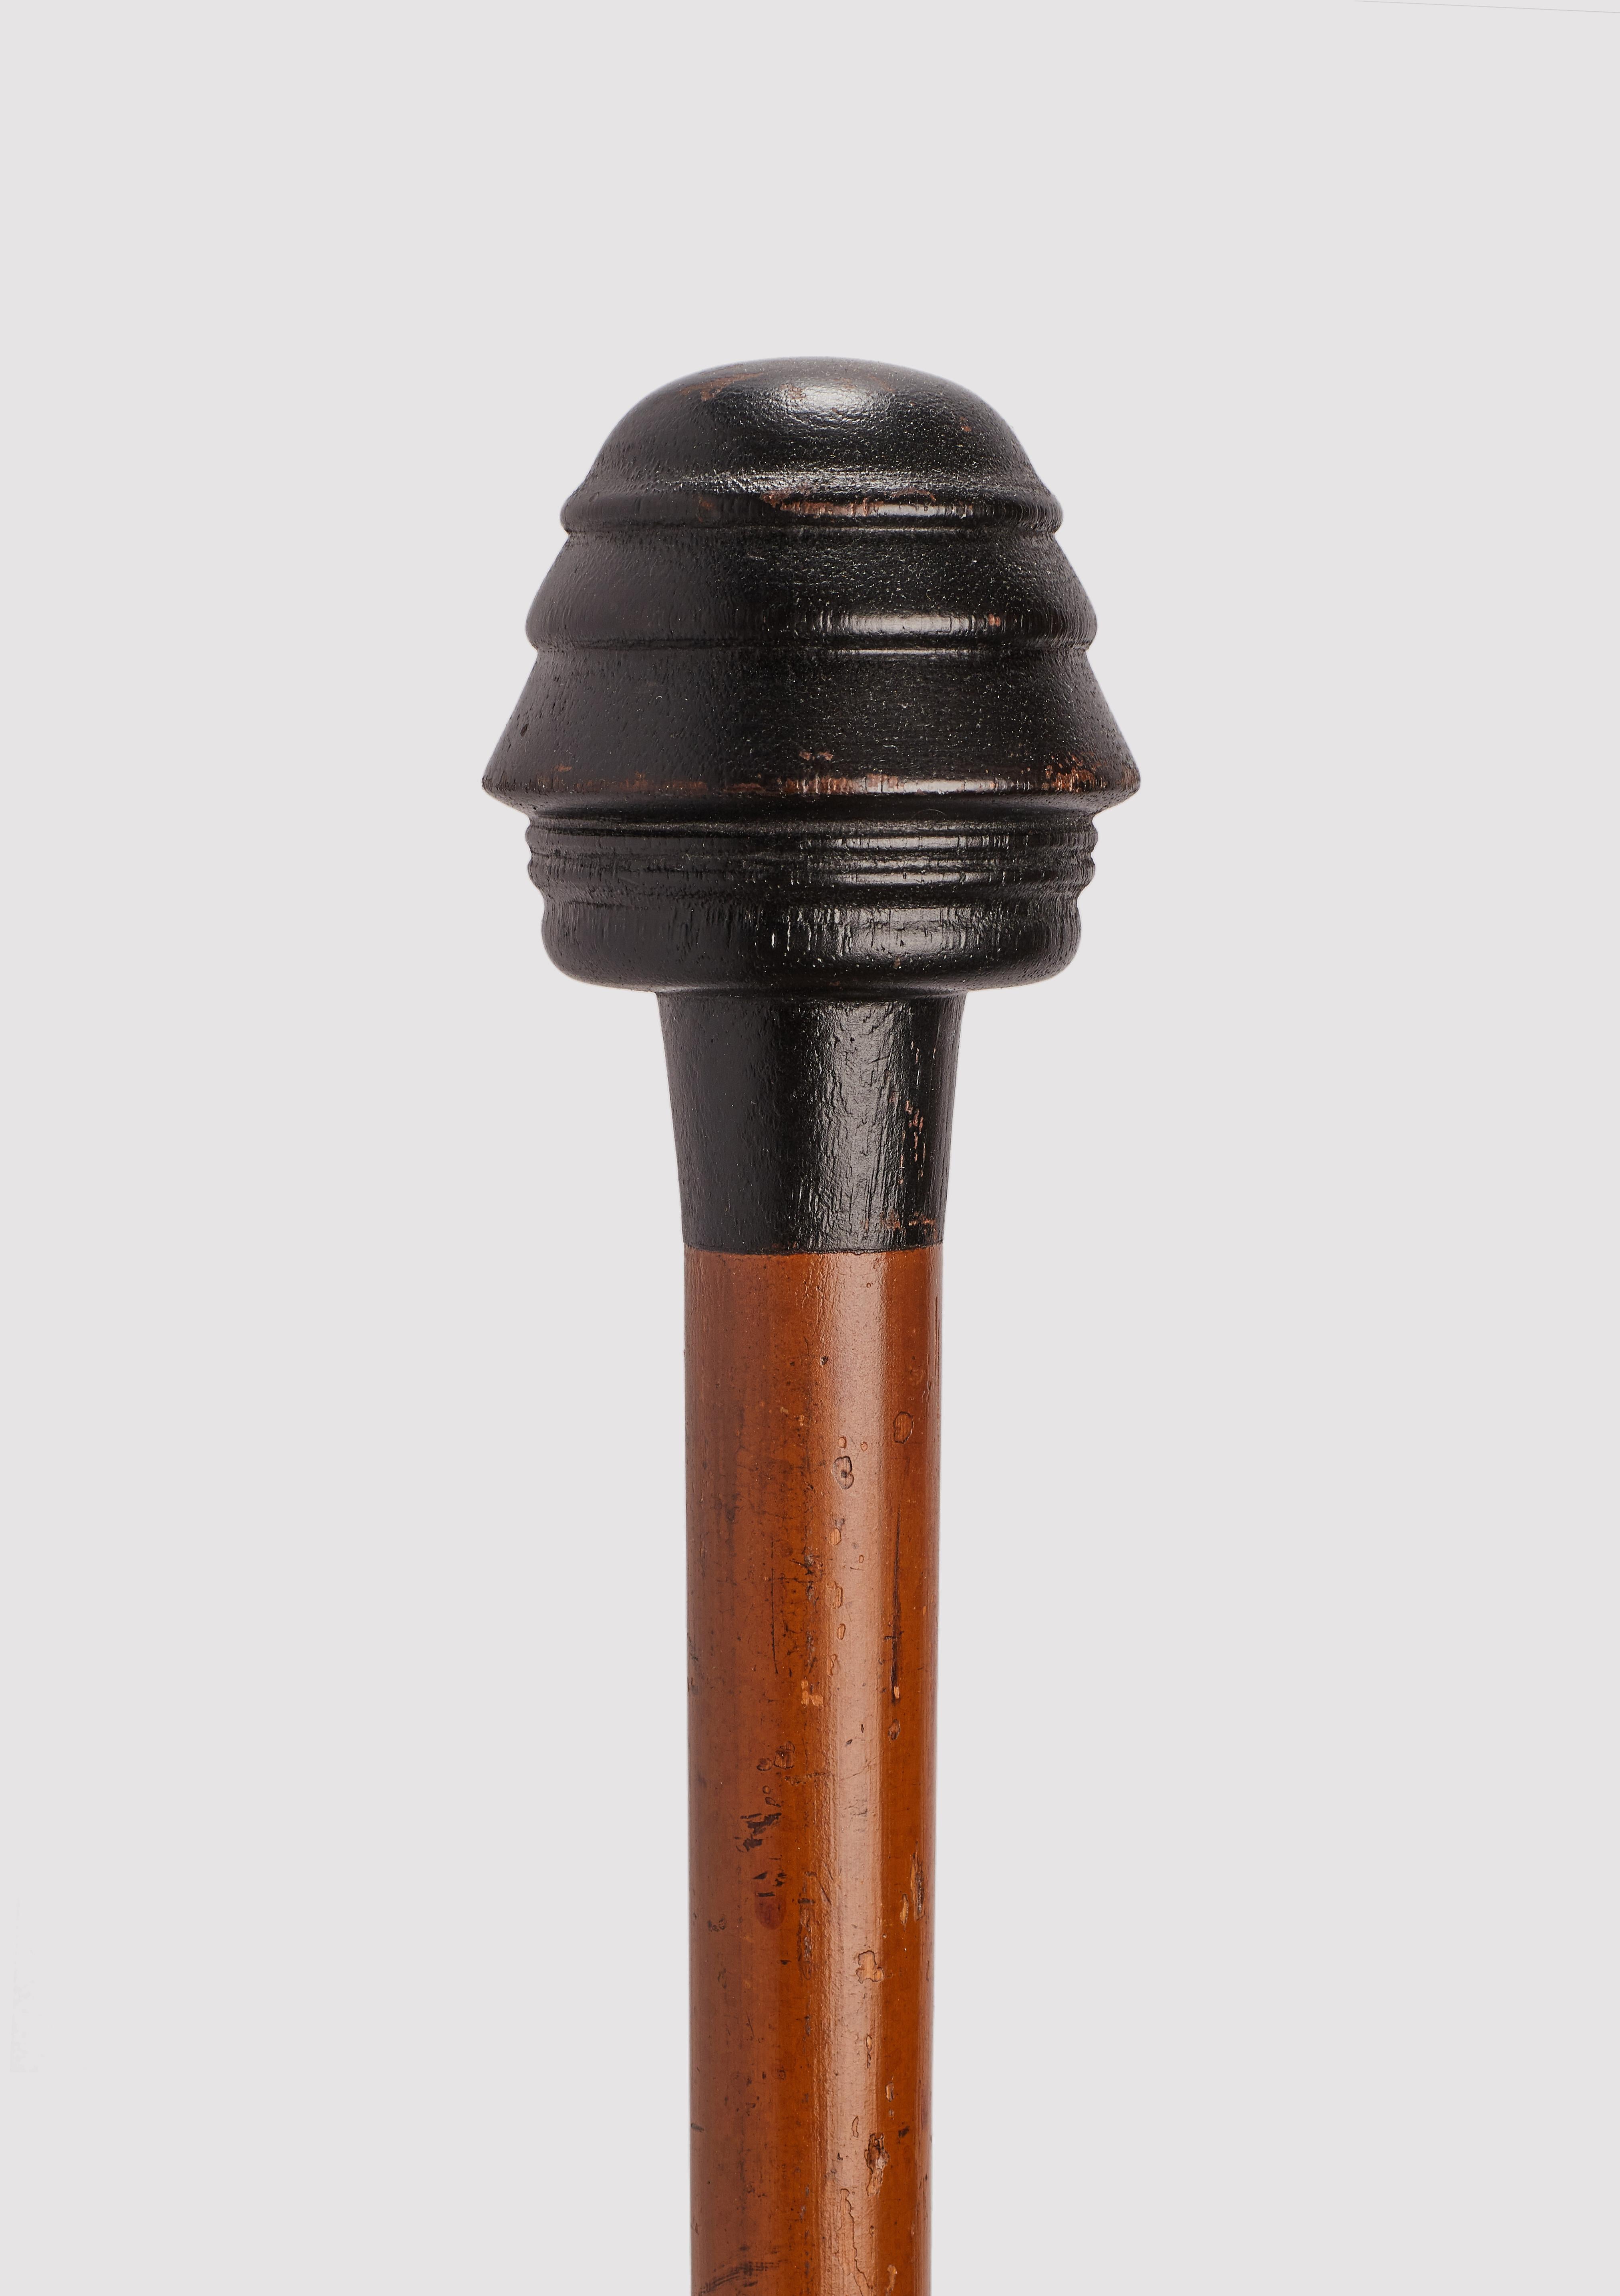 Gadget-System walking stick: shadow gadget cane with Napoleon profile on its ebonized wood handle. Malacca wood shaft. Iron ferrule. France 1870 circa.